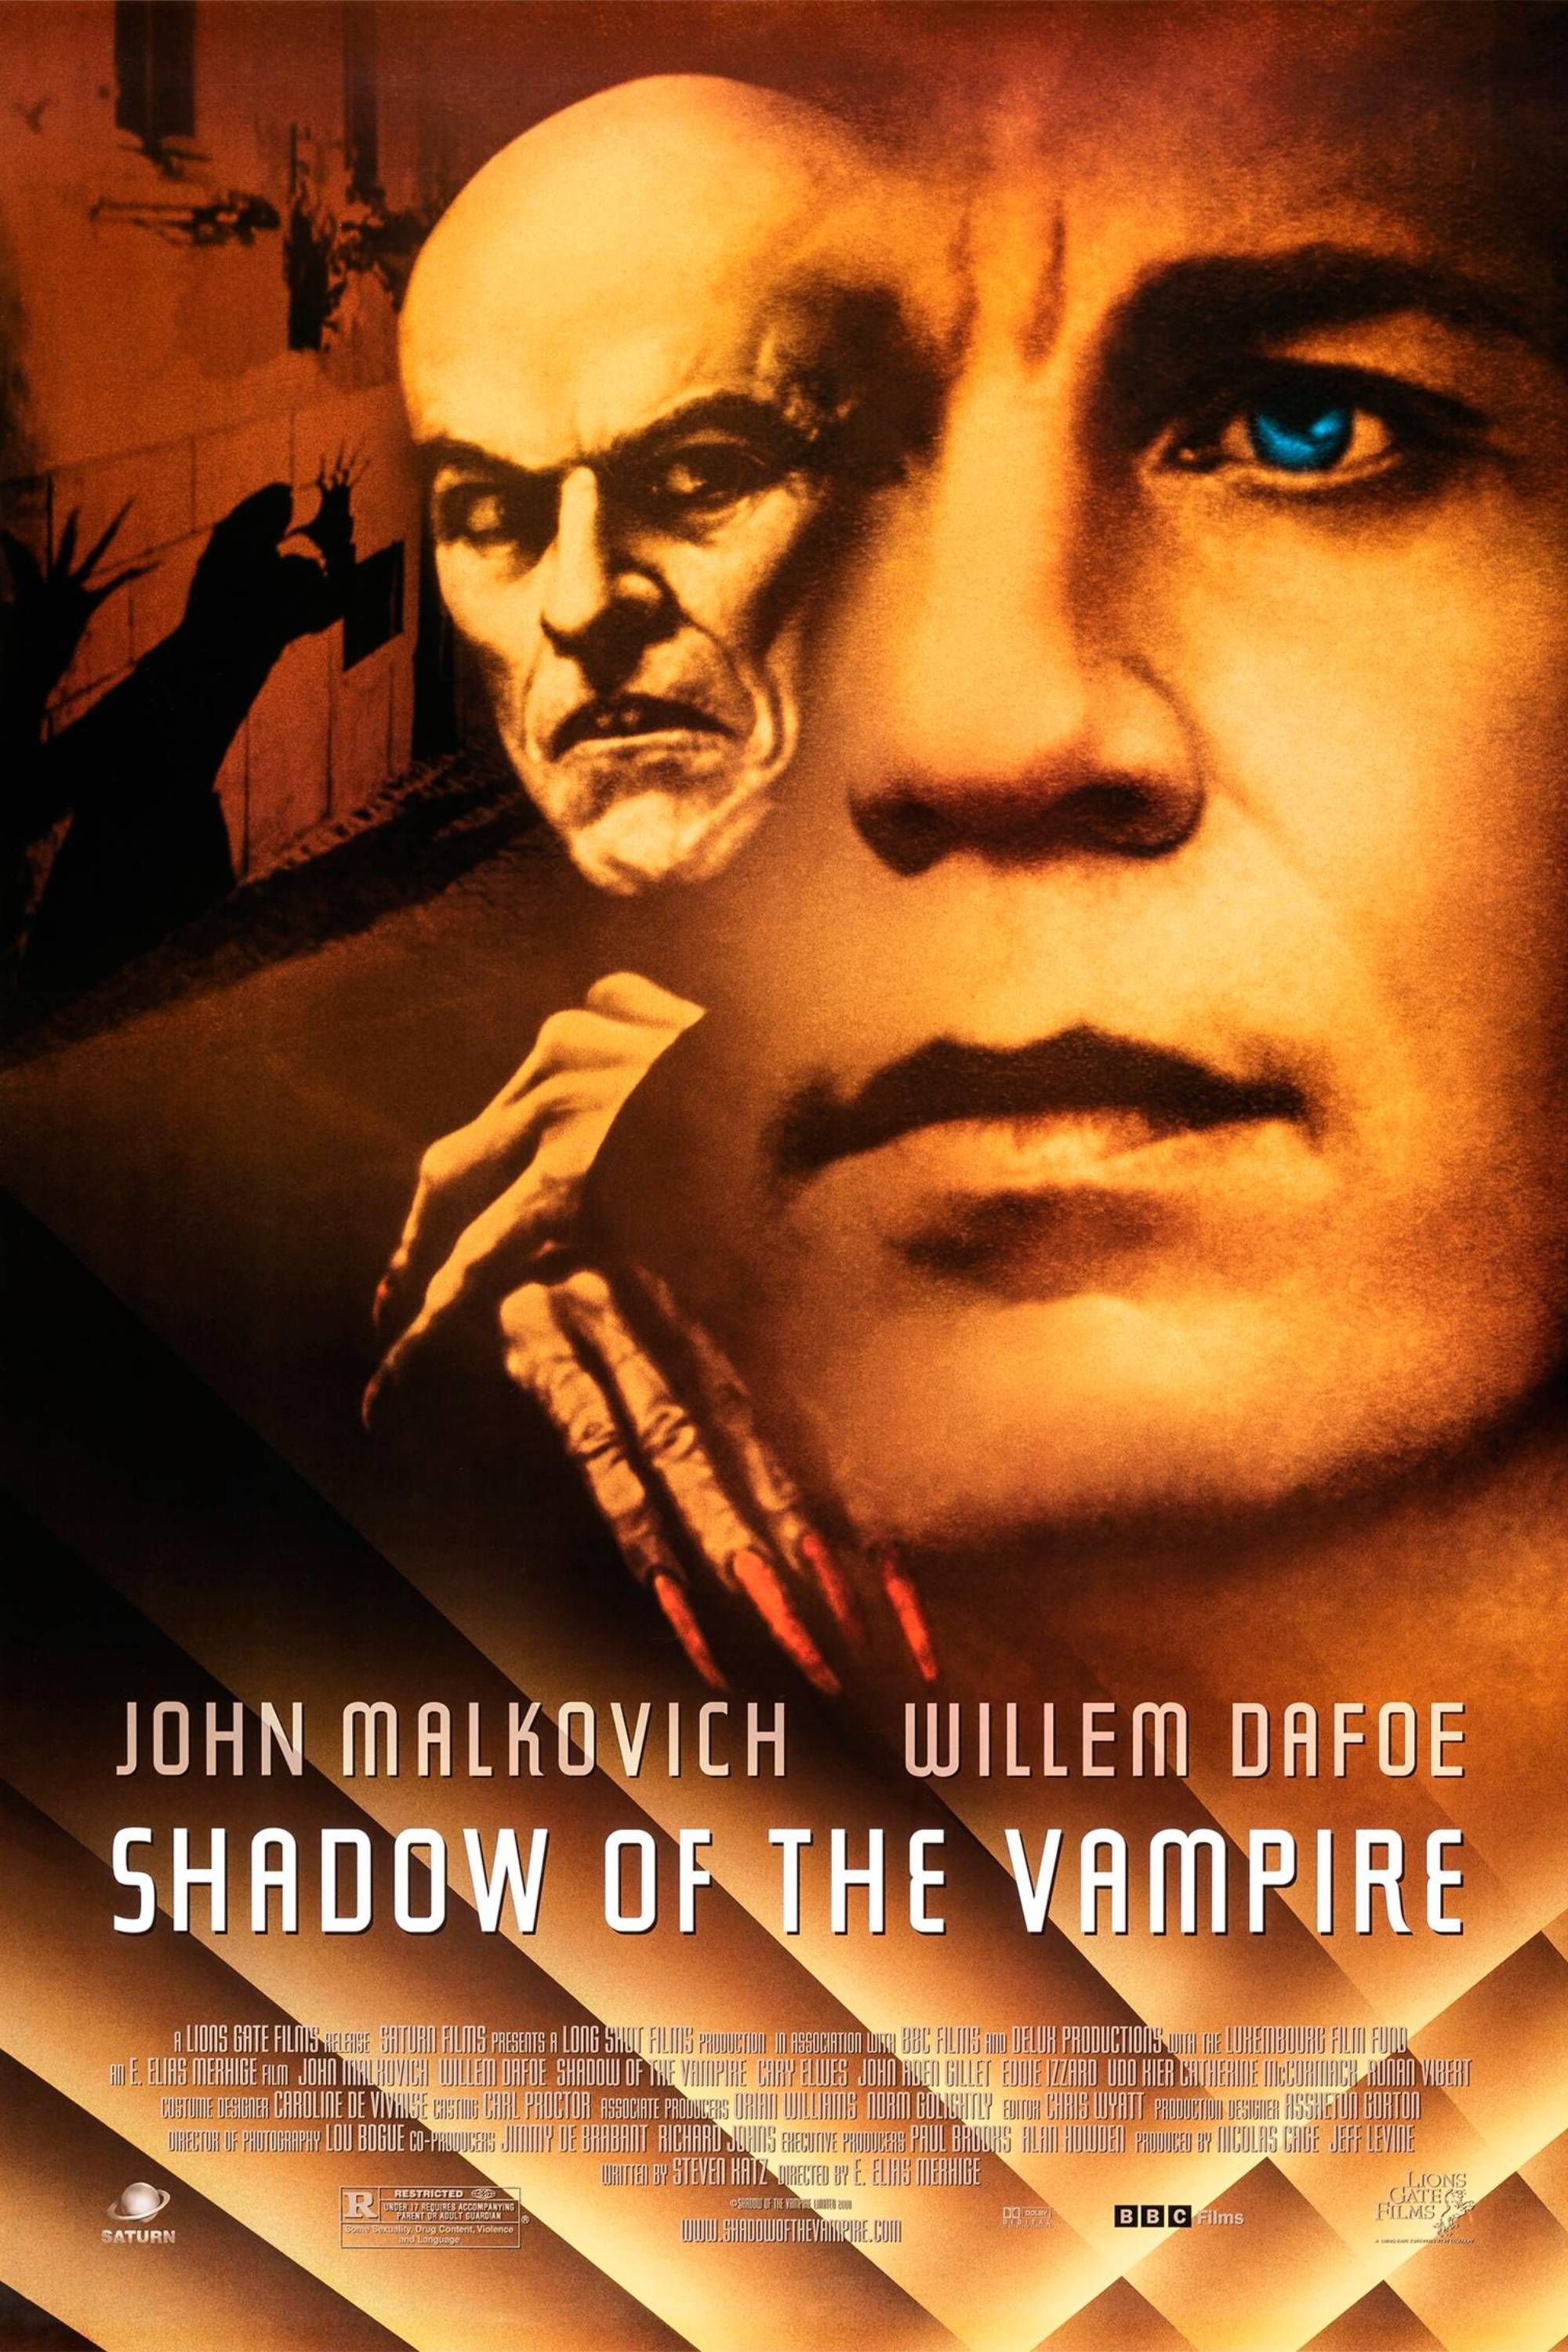 shadow-of-the-vampire-2000-poster-john-malkovich-willem-dafoe.jpg